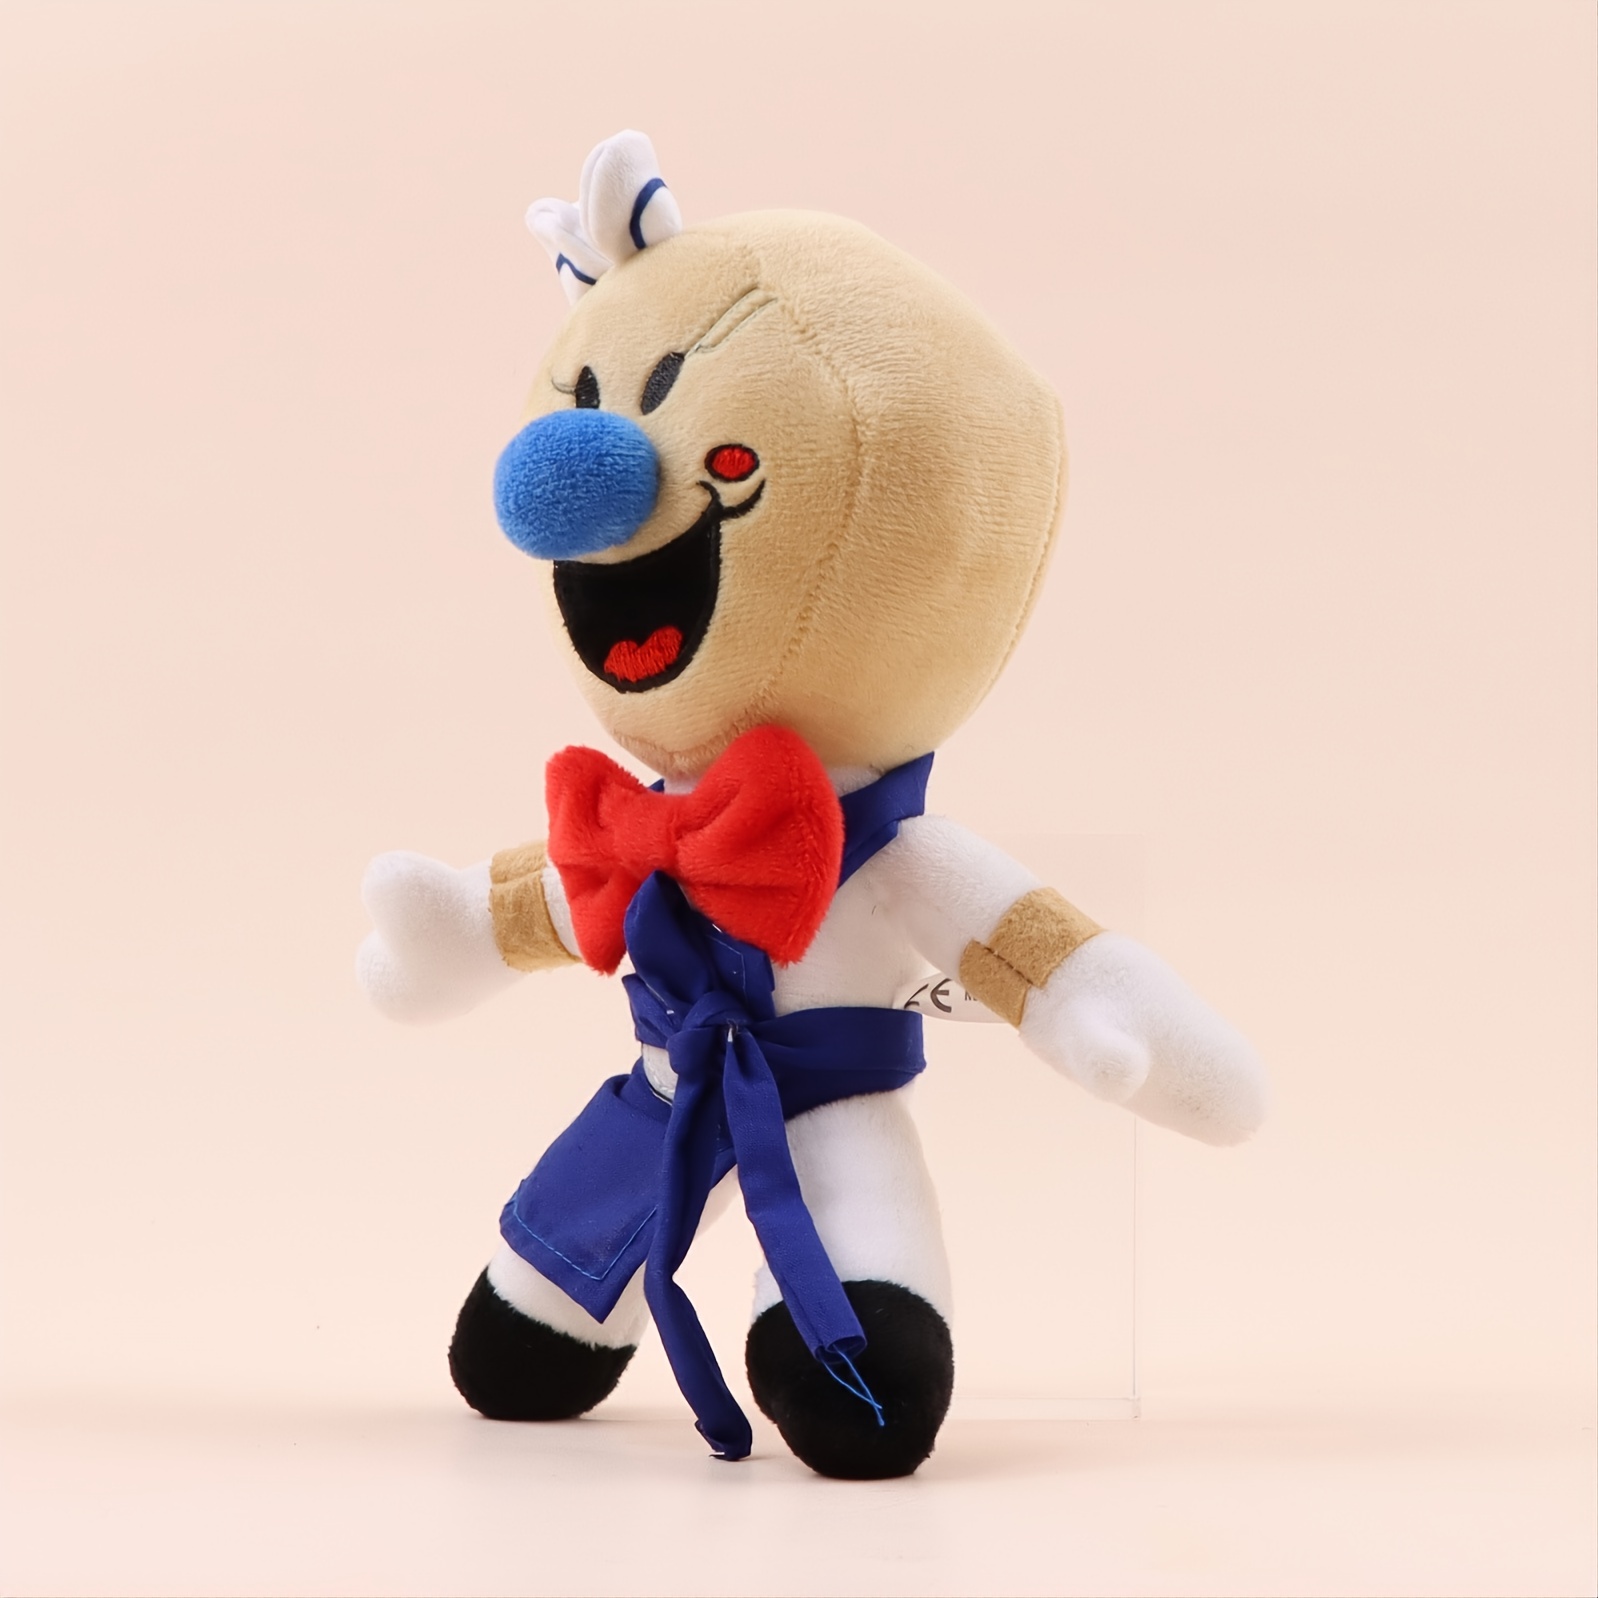 25cm/9.84'' New Ice Scream Rod Plush Toy Stuffed Soft Toys Cartoon Dolls  Horror Game Character Halloween Christmas Decor Gift